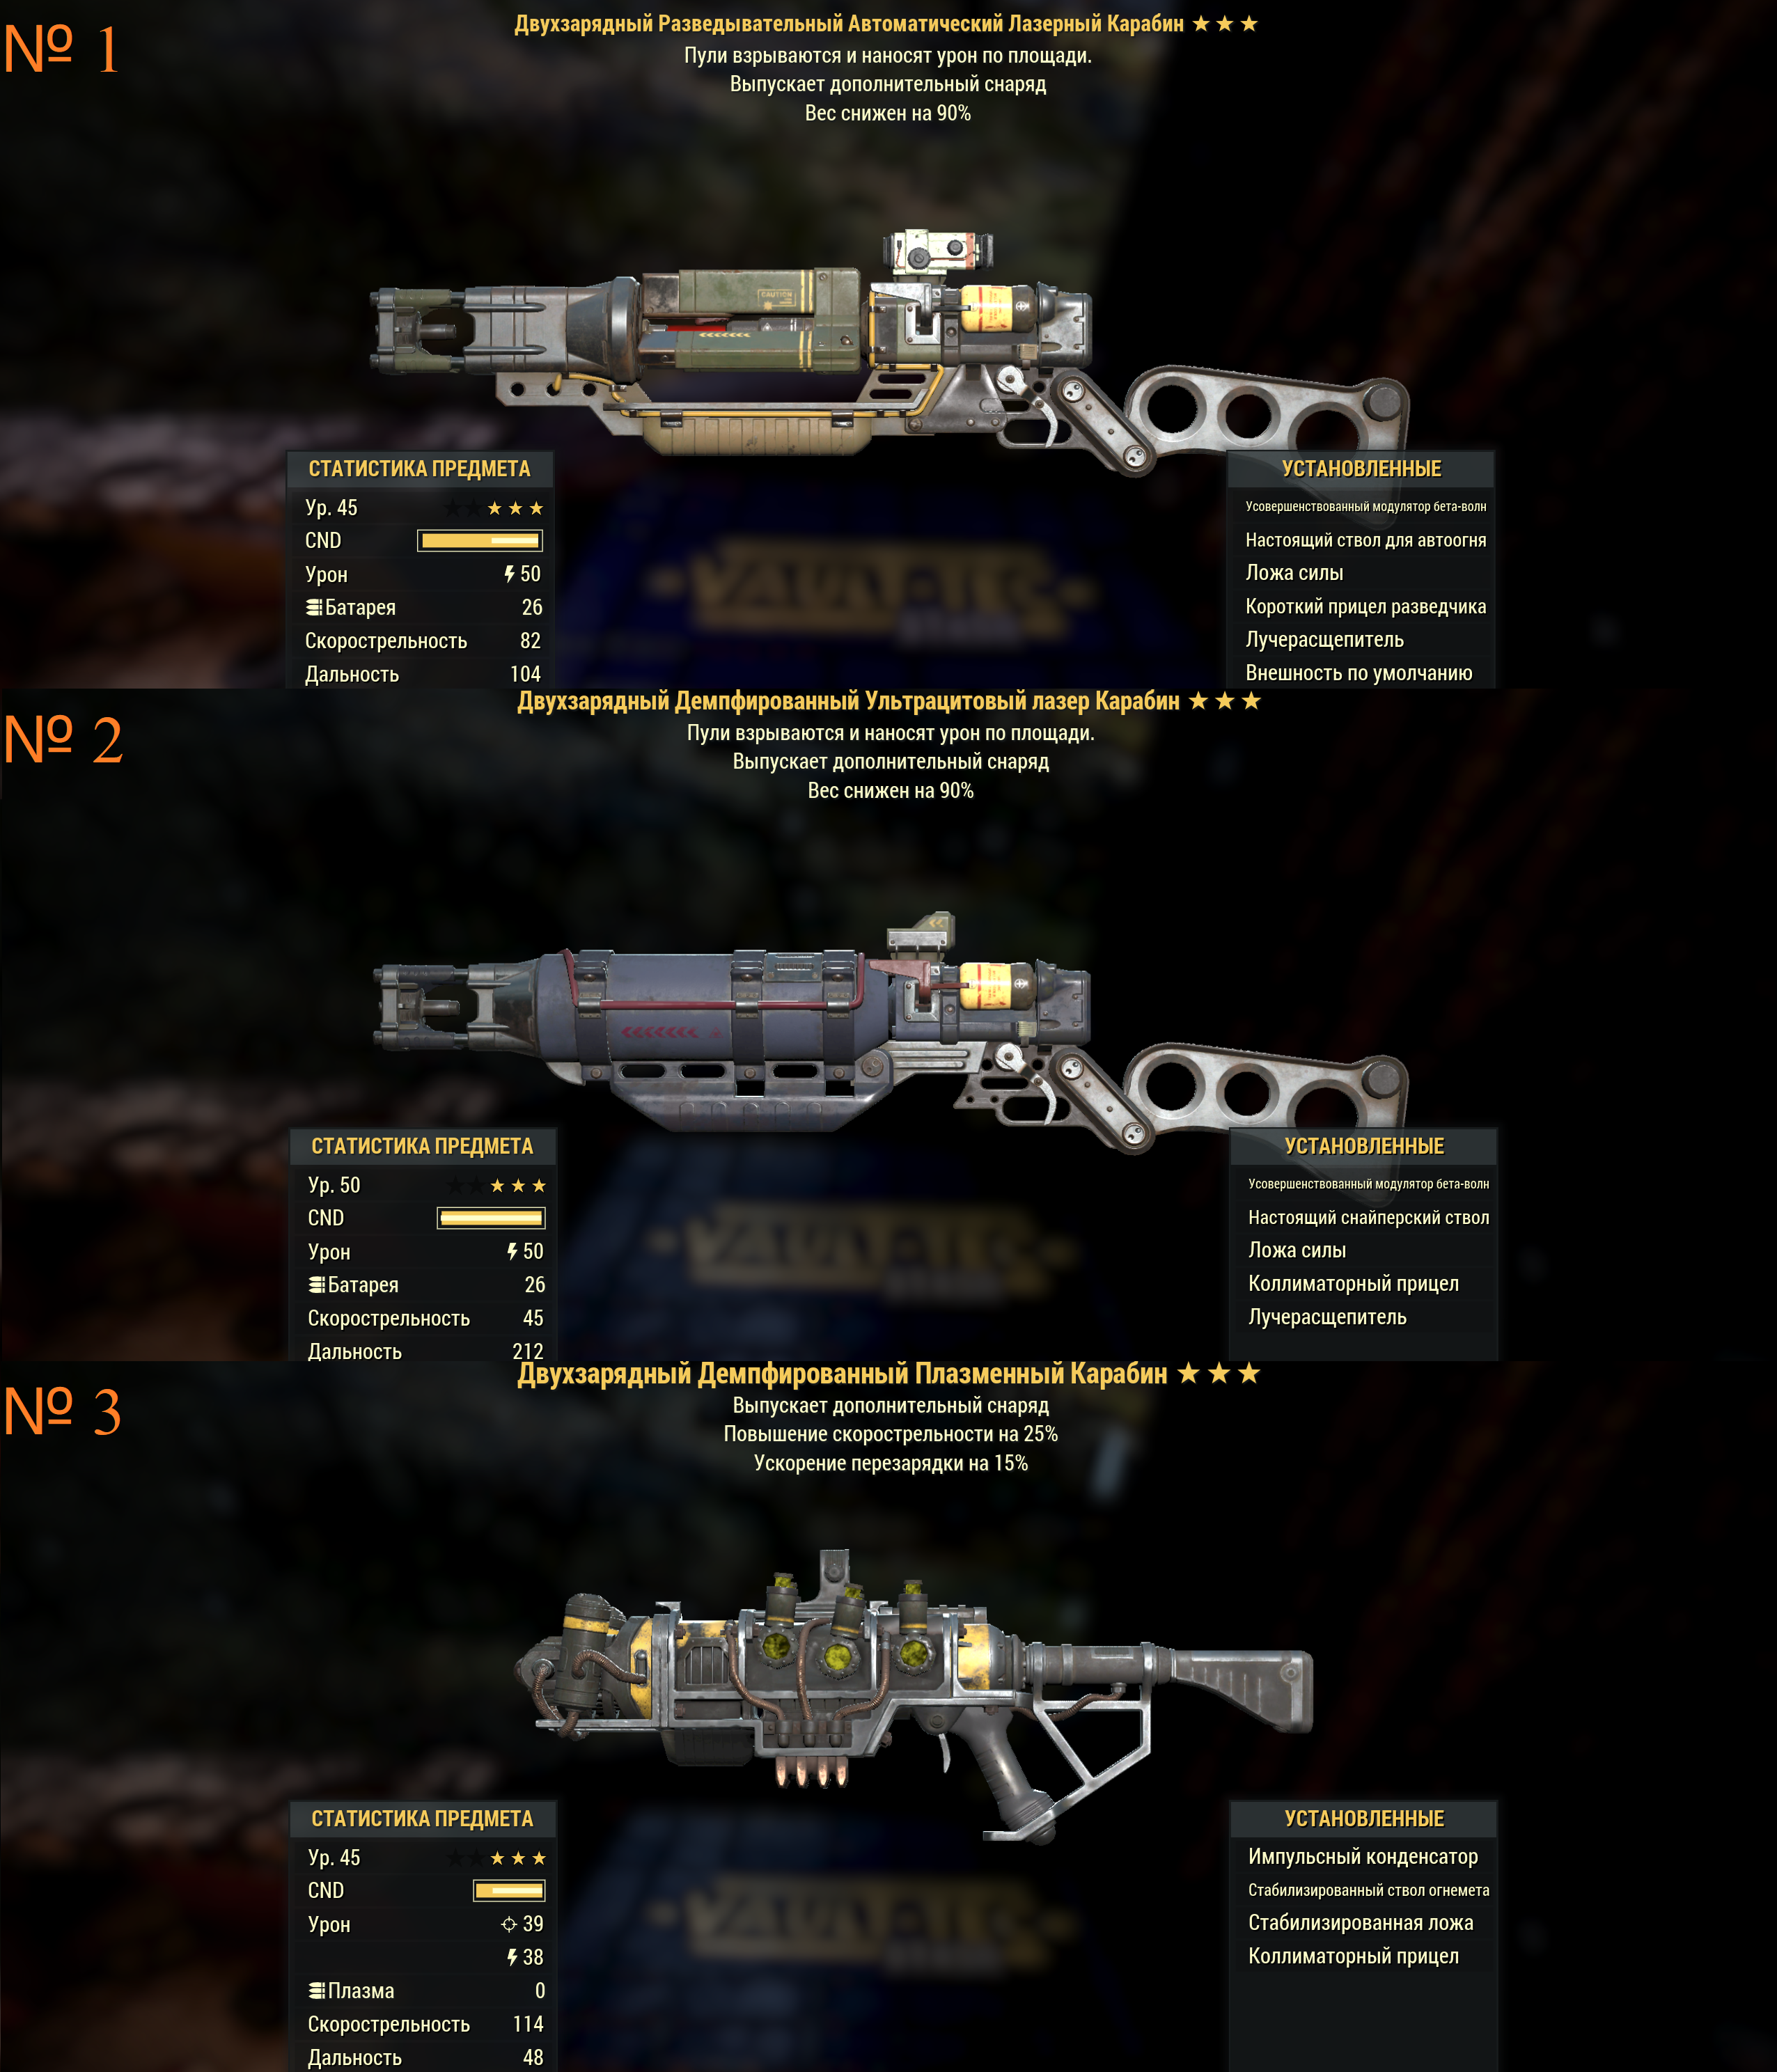 Легендарное оружие Fallout 76. Таблица оружия фоллаут 76. Оружие из фоллаут 76. Фоллаут 76 легендарные свойства оружия.